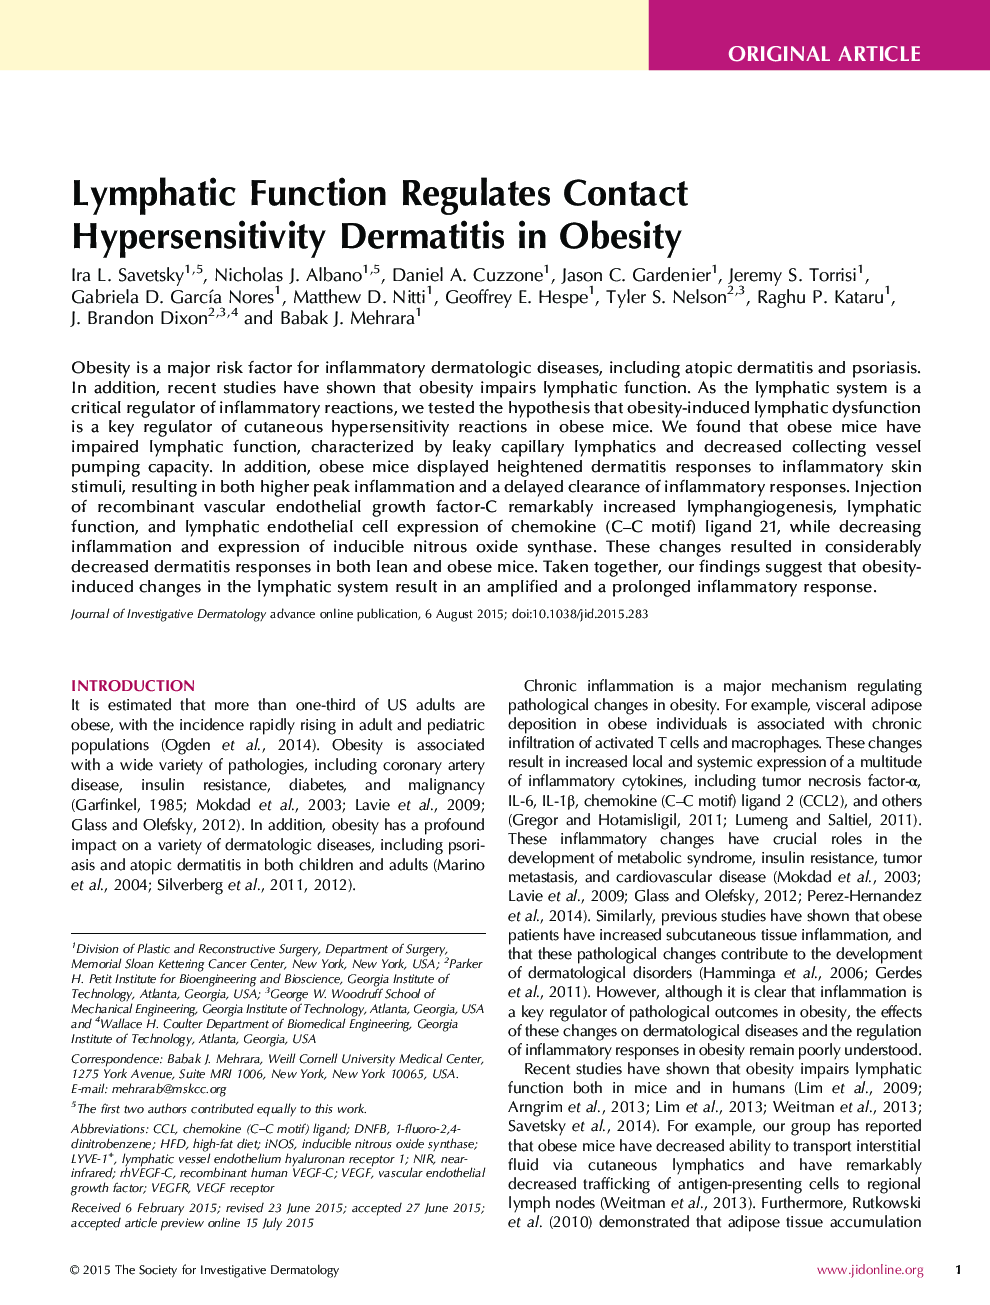 Lymphatic Function Regulates Contact Hypersensitivity Dermatitis in Obesity